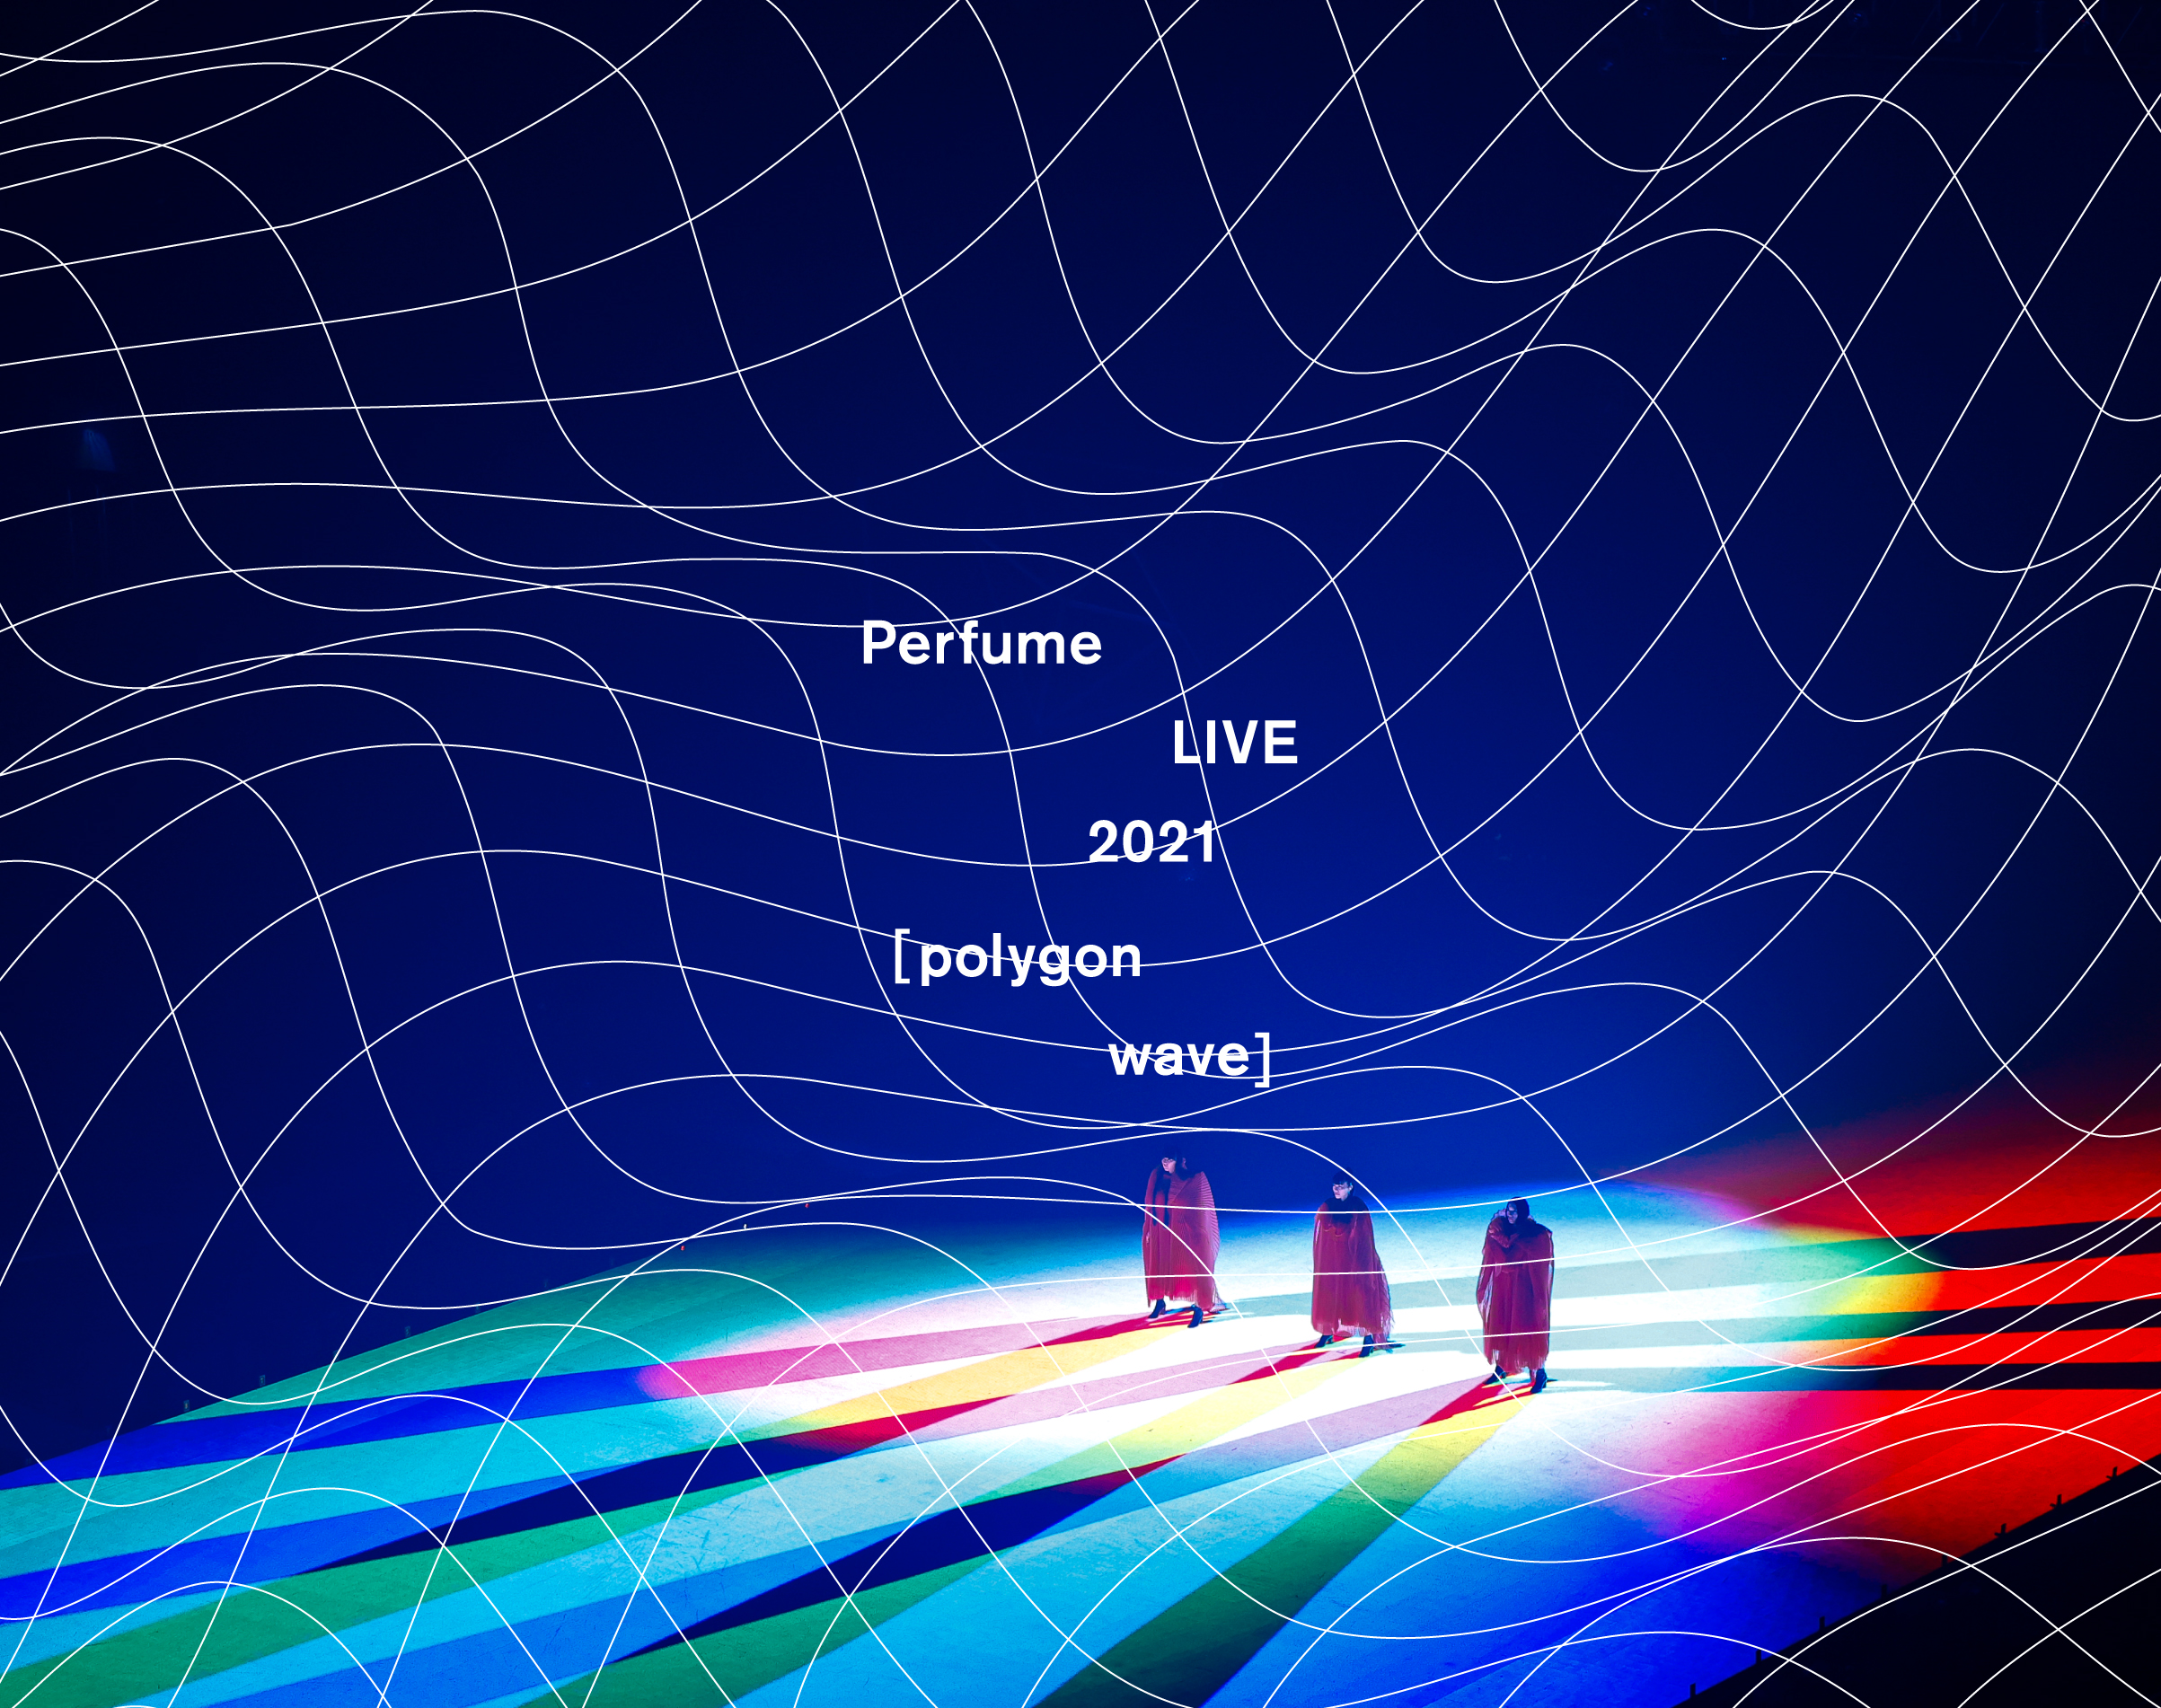 Perfume LIVE 2021 [polygon wave]」Blu-ray＆DVDジャケット写真・初回限定盤の特典詳細公開！ - Perfume